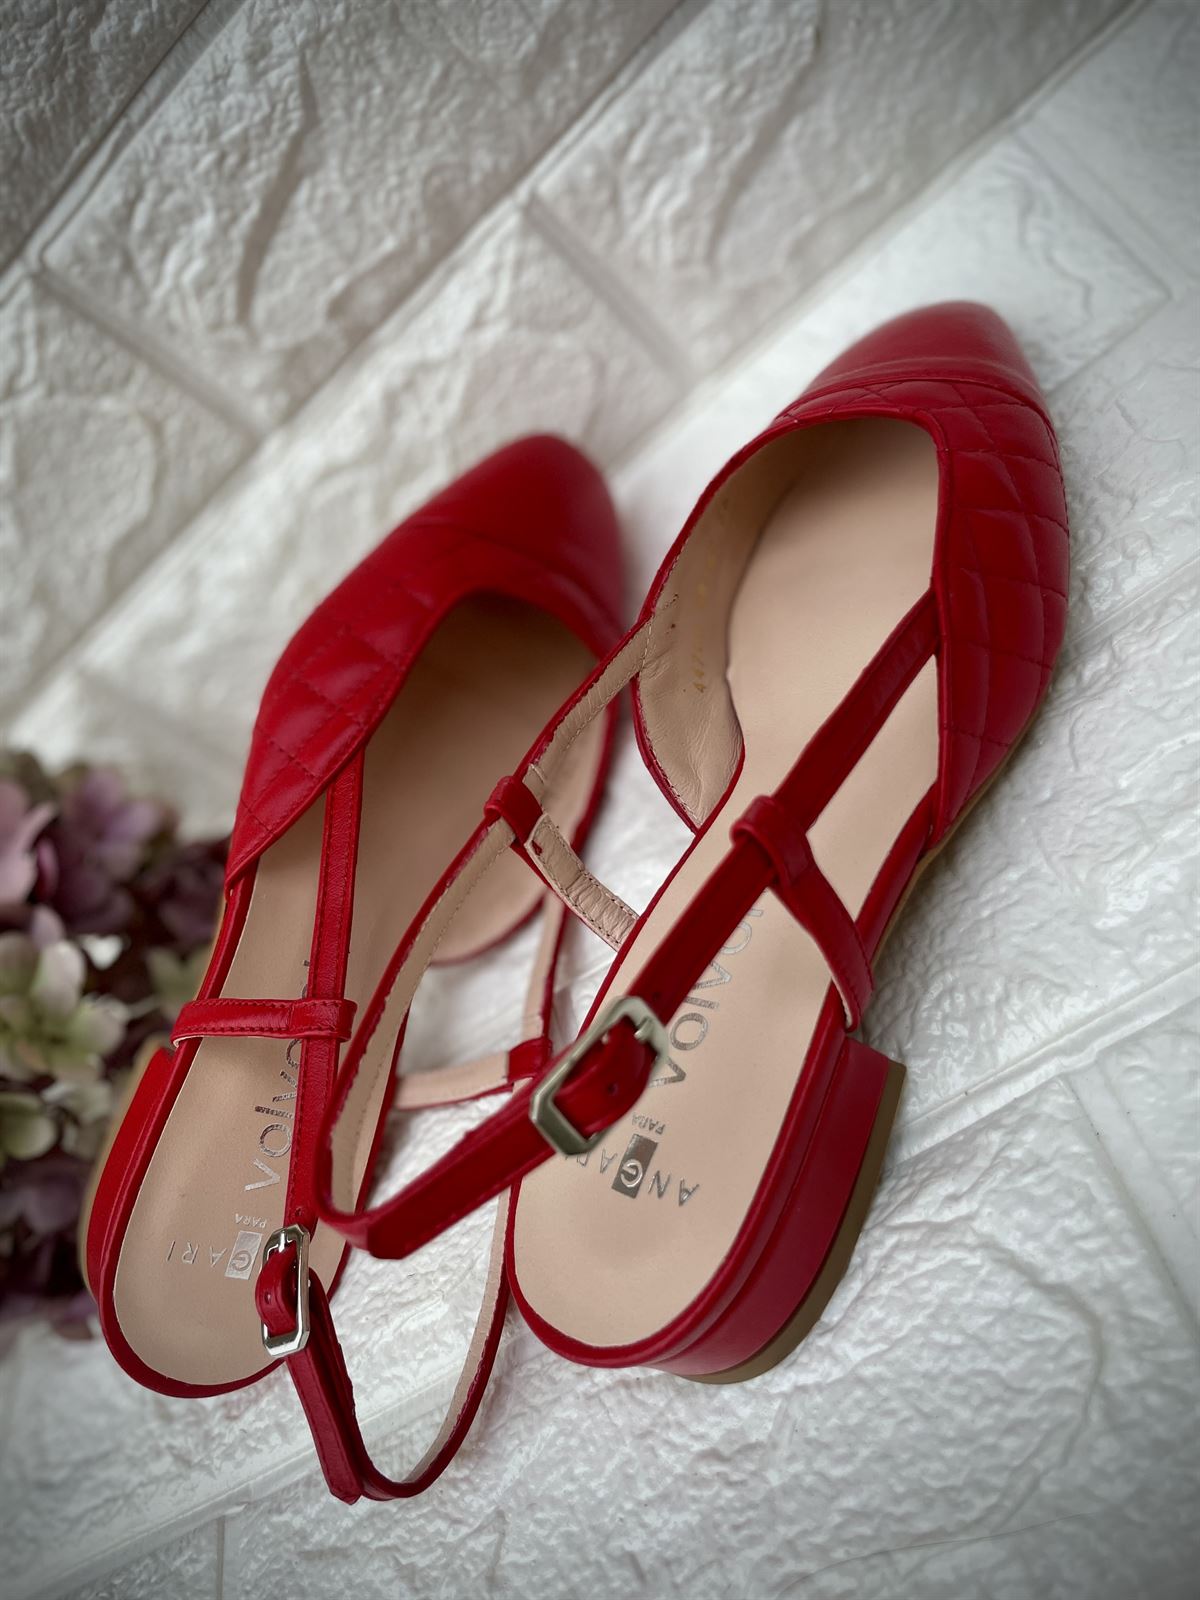 Zapatos Angari bailarinas puntera roja - Imagen 7